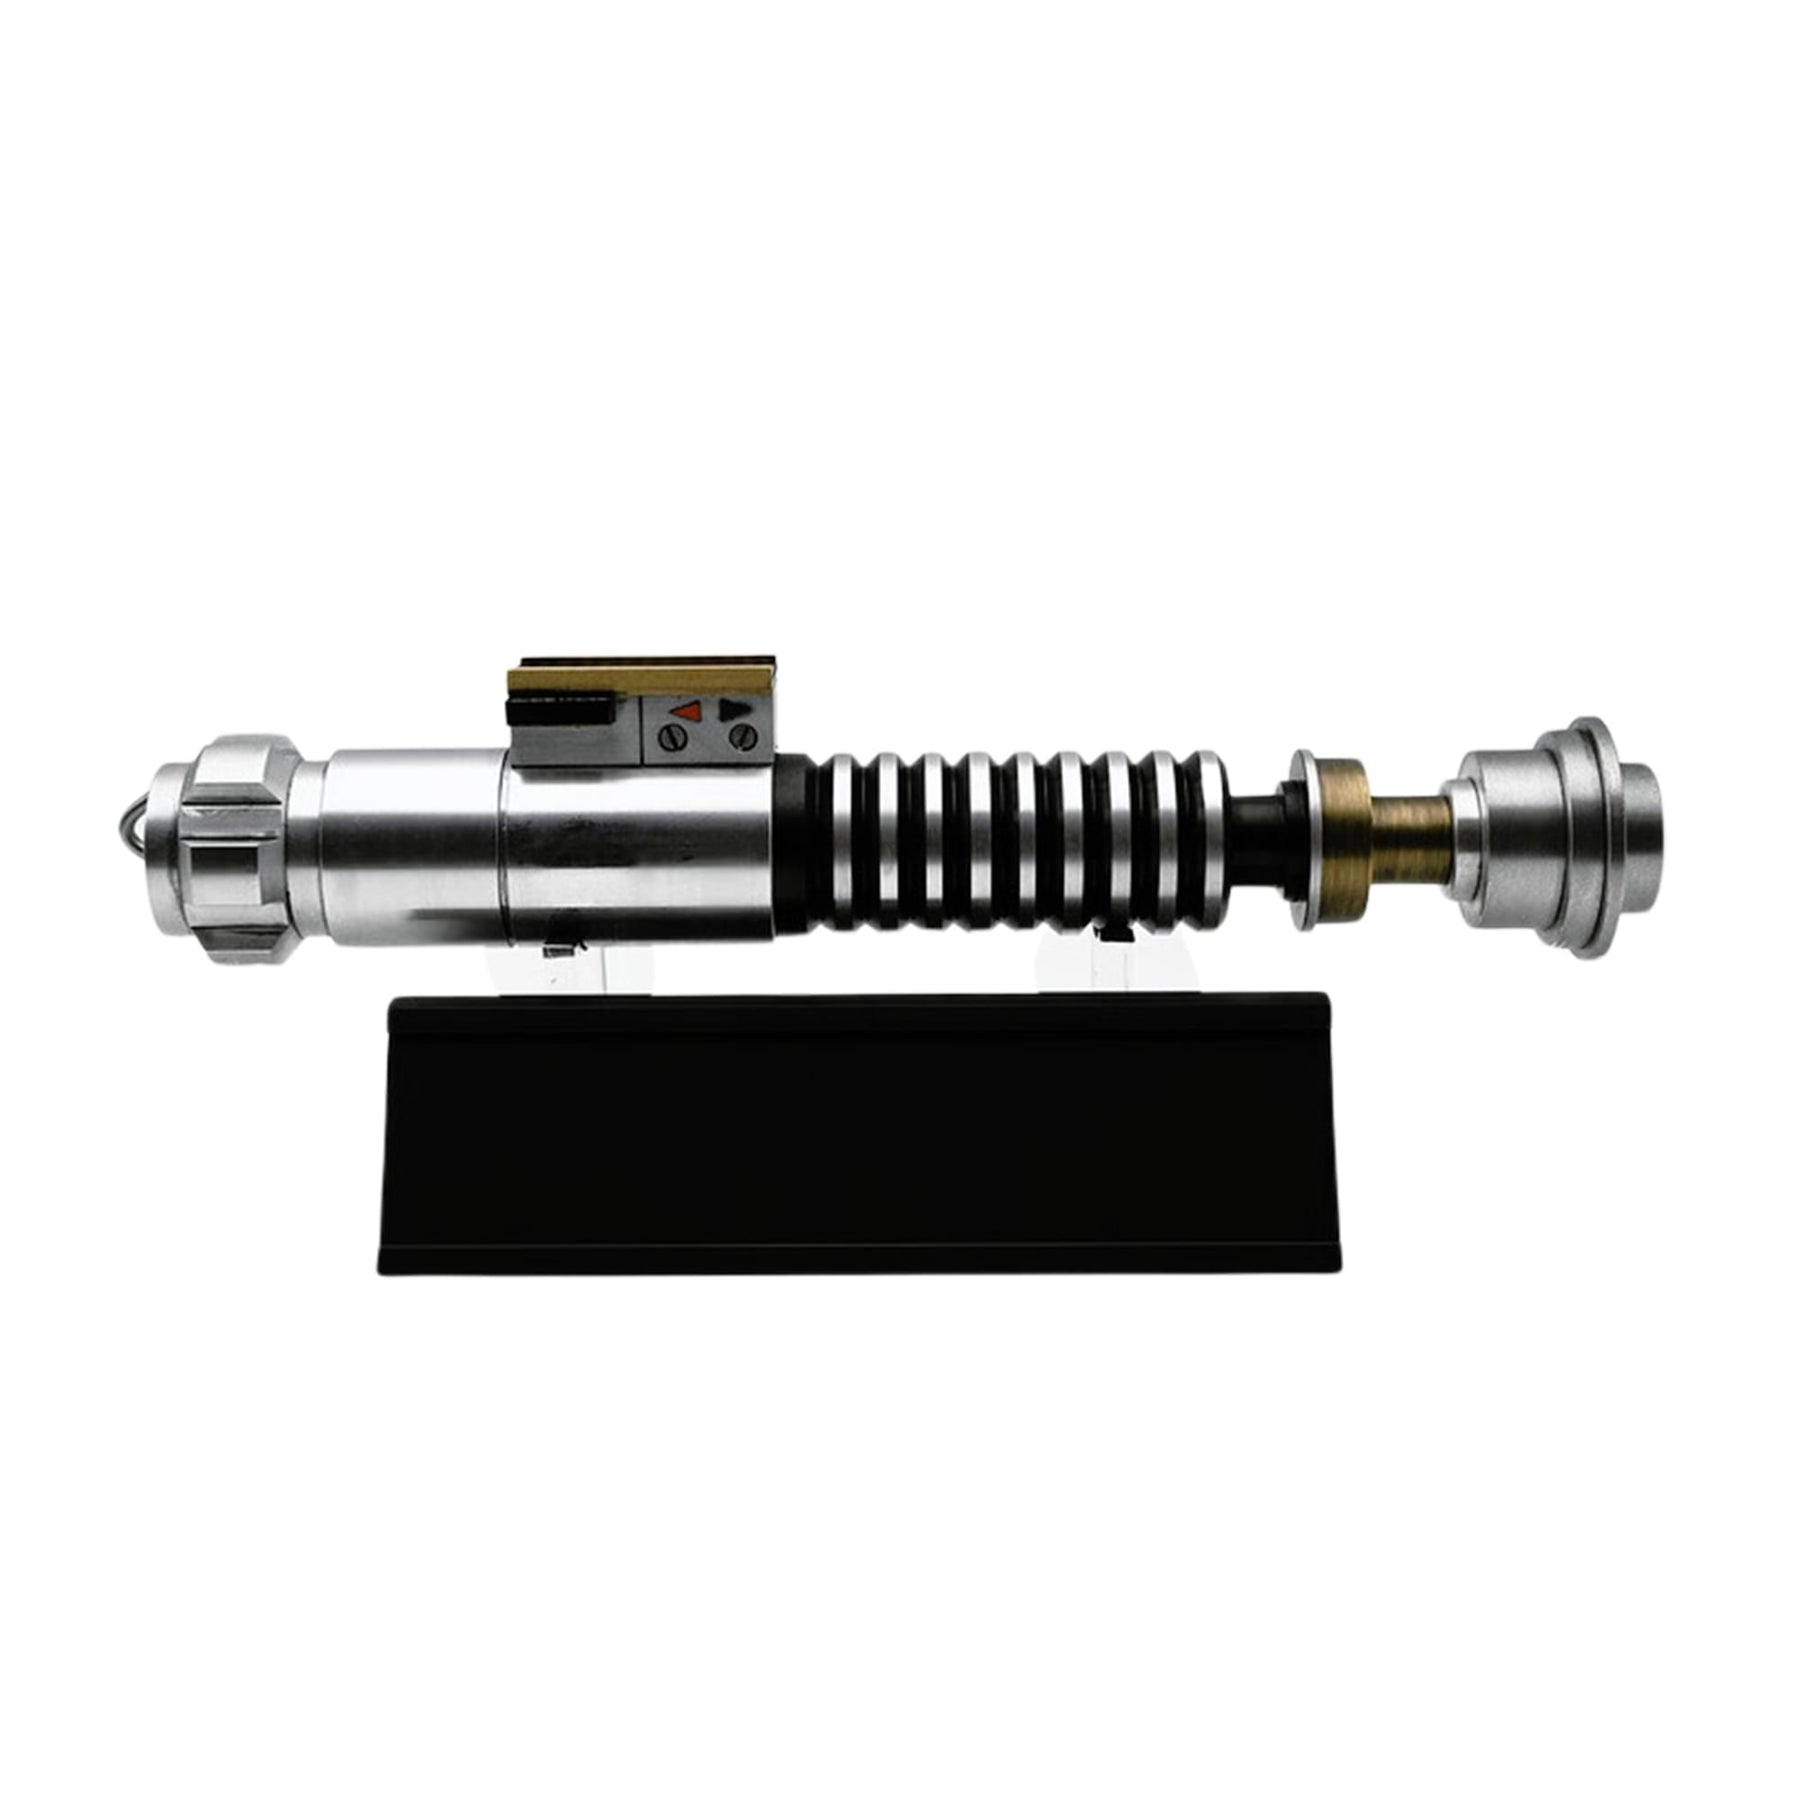 Star Wars Luke Skywalker Limited Edition Lightsaber Prop Replica